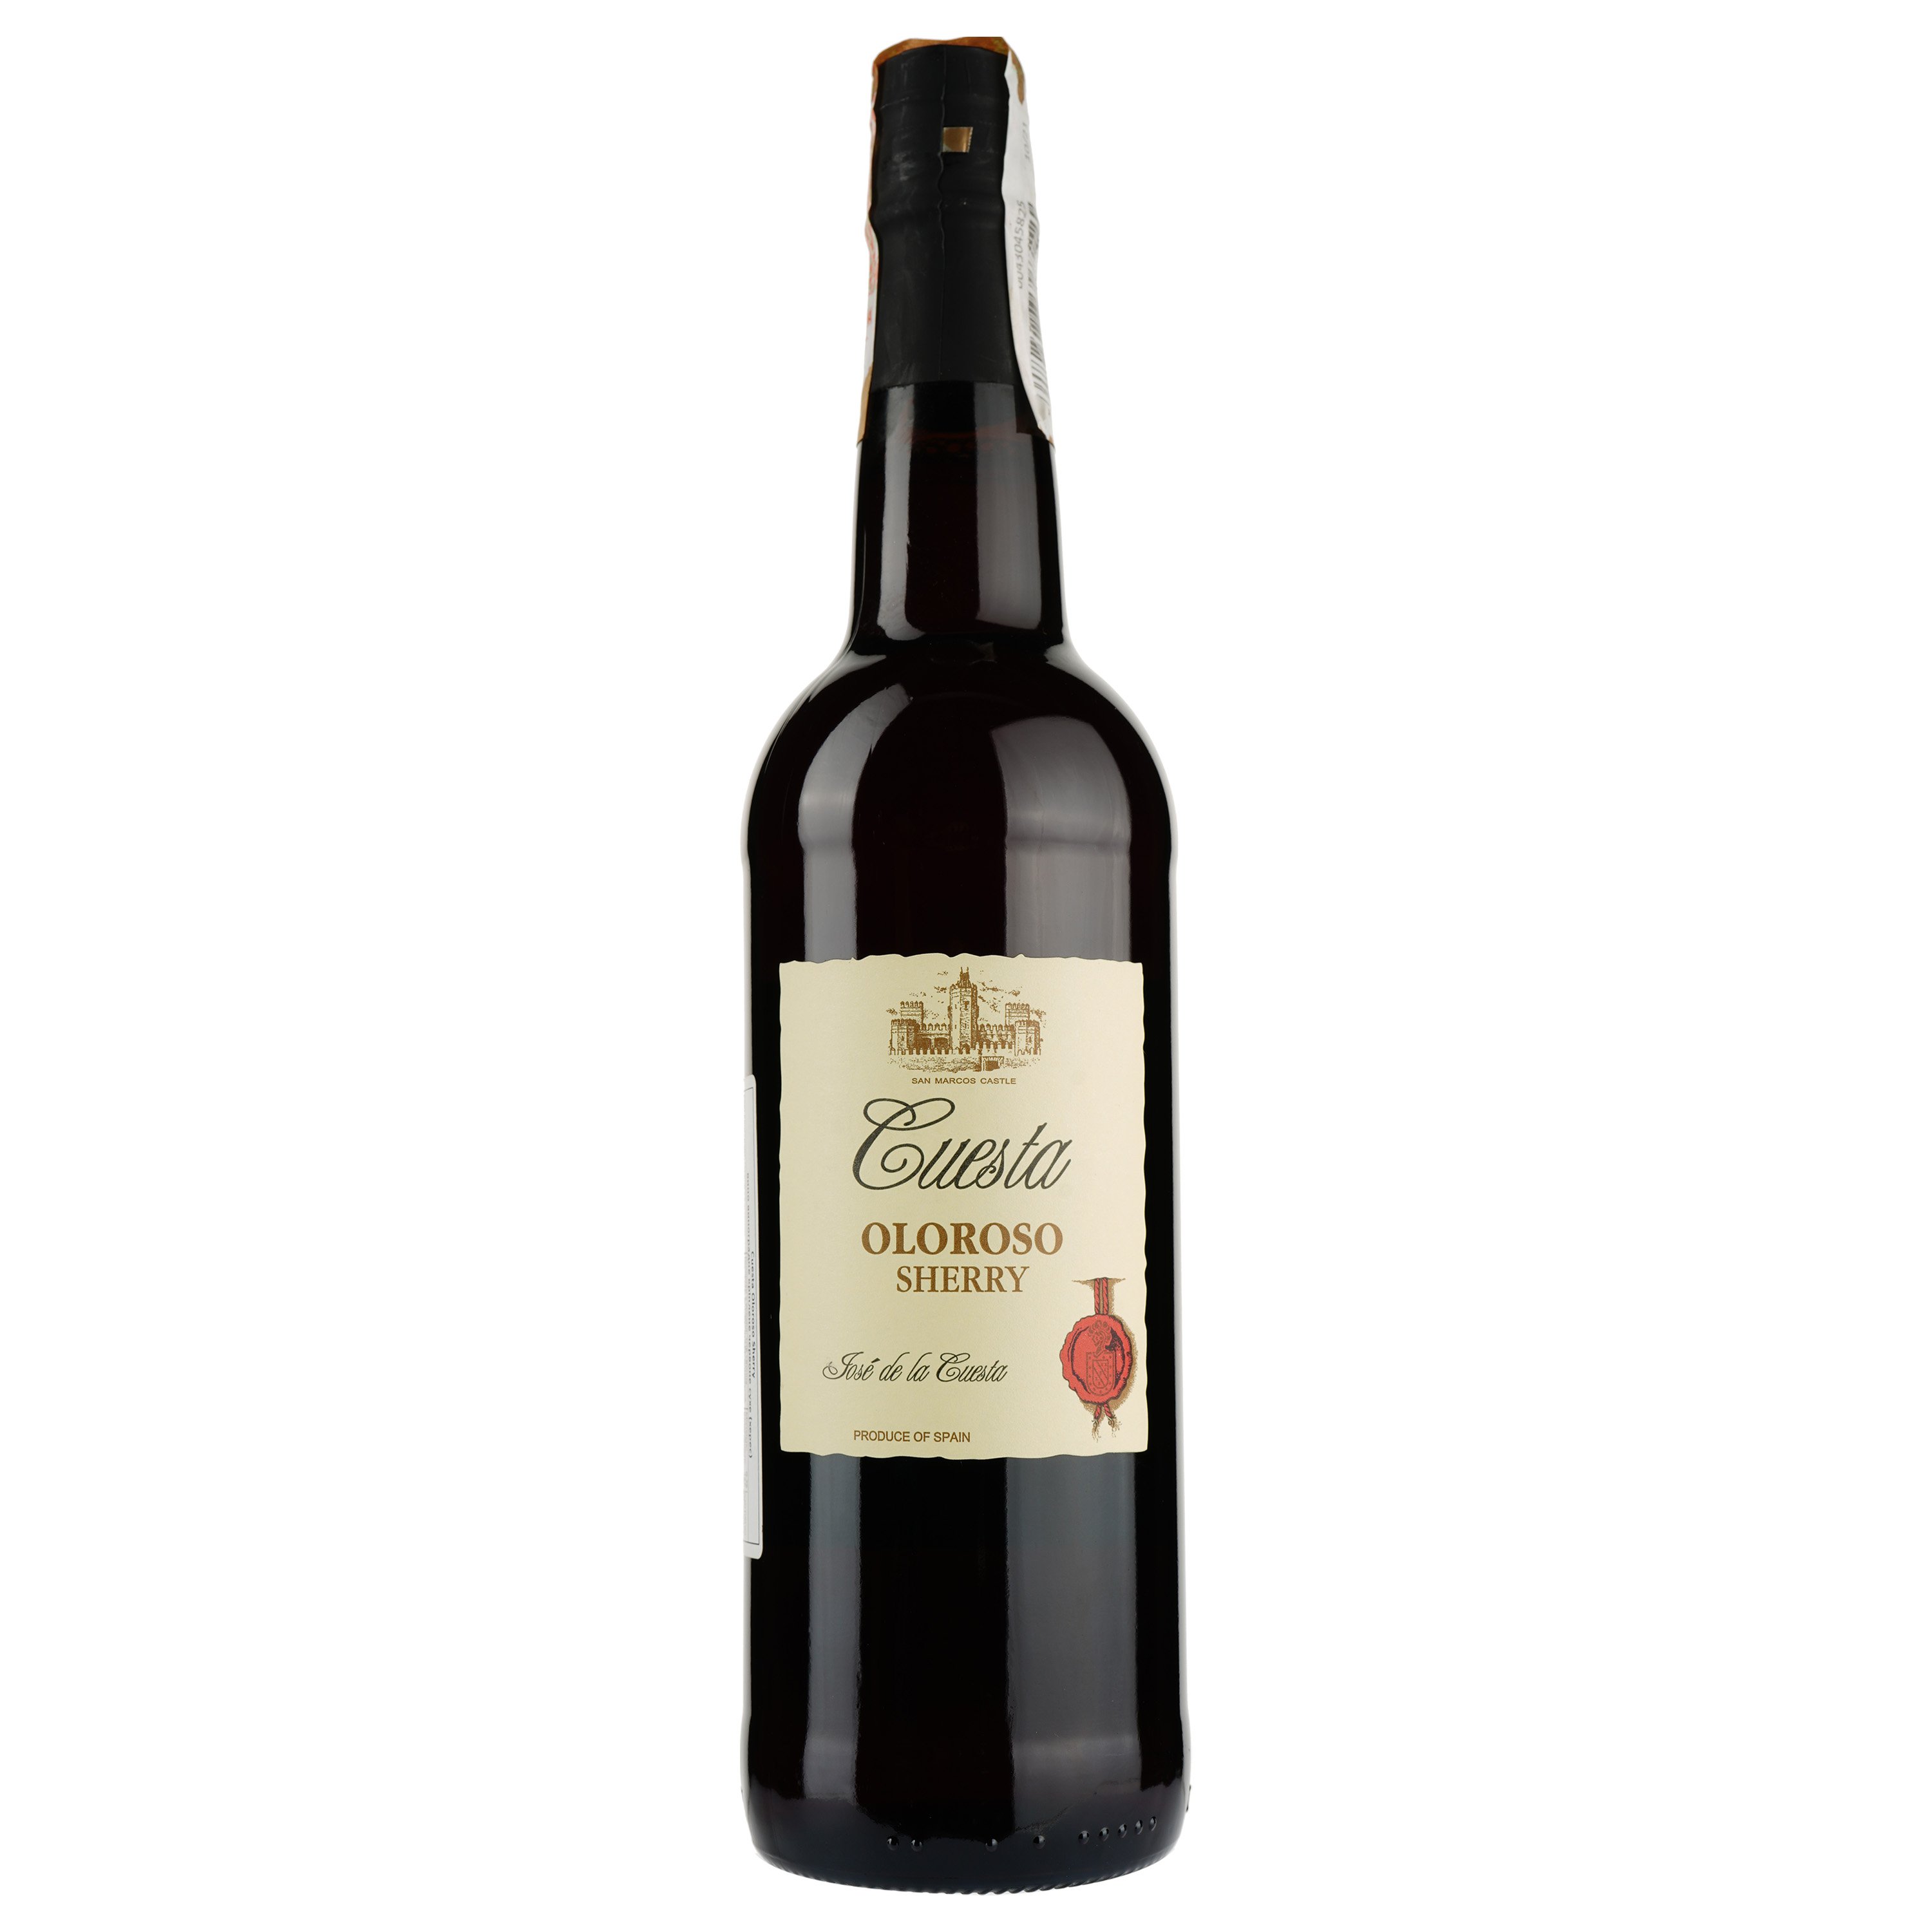 Вино Luis Caballero Cuesta Oloroso Sherry, красне, сухое, 0,75 л - фото 1